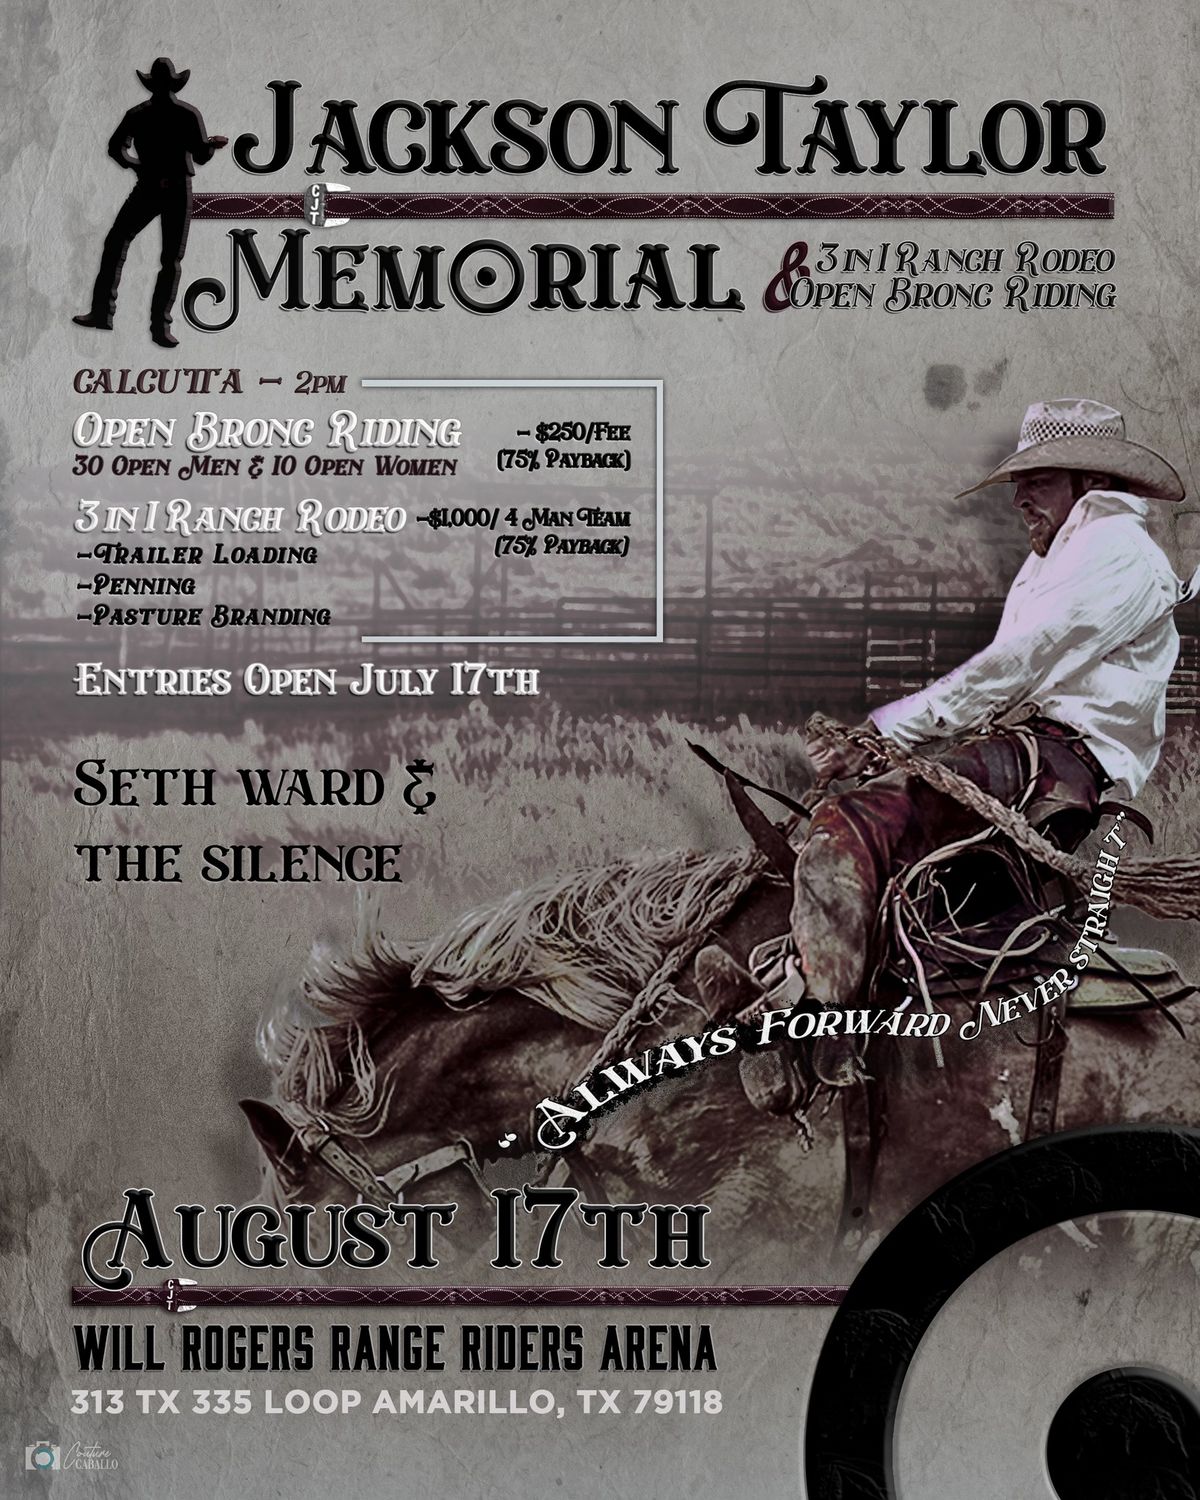 JACKSON TAYLOR MEMORIAL: Open Bronc Riding & Ranch Rodeo